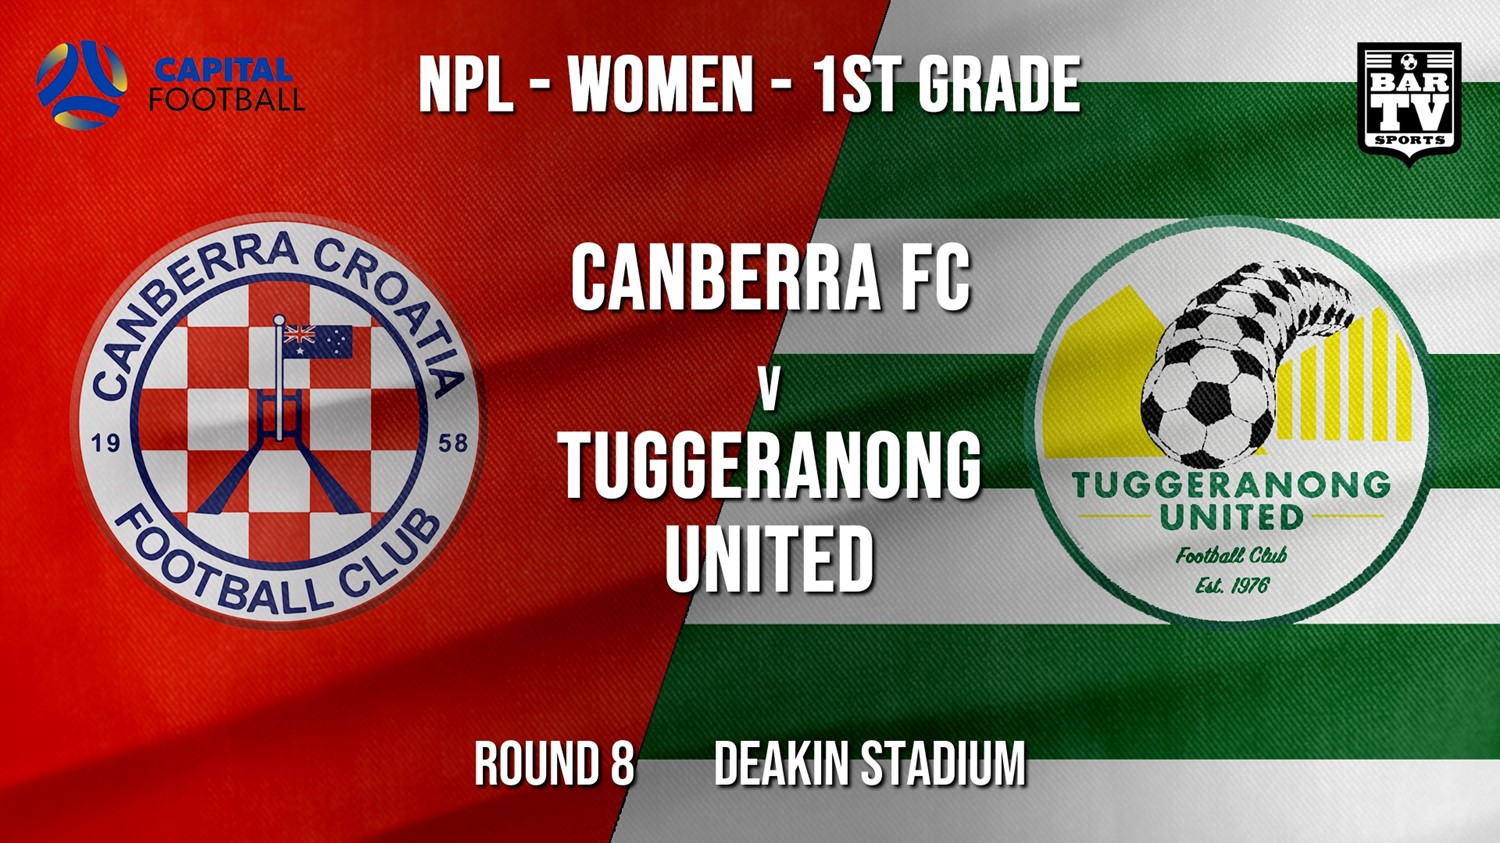 NPLW - Capital Round 8 - Canberra FC (women) v Tuggeranong United FC (women) Minigame Slate Image